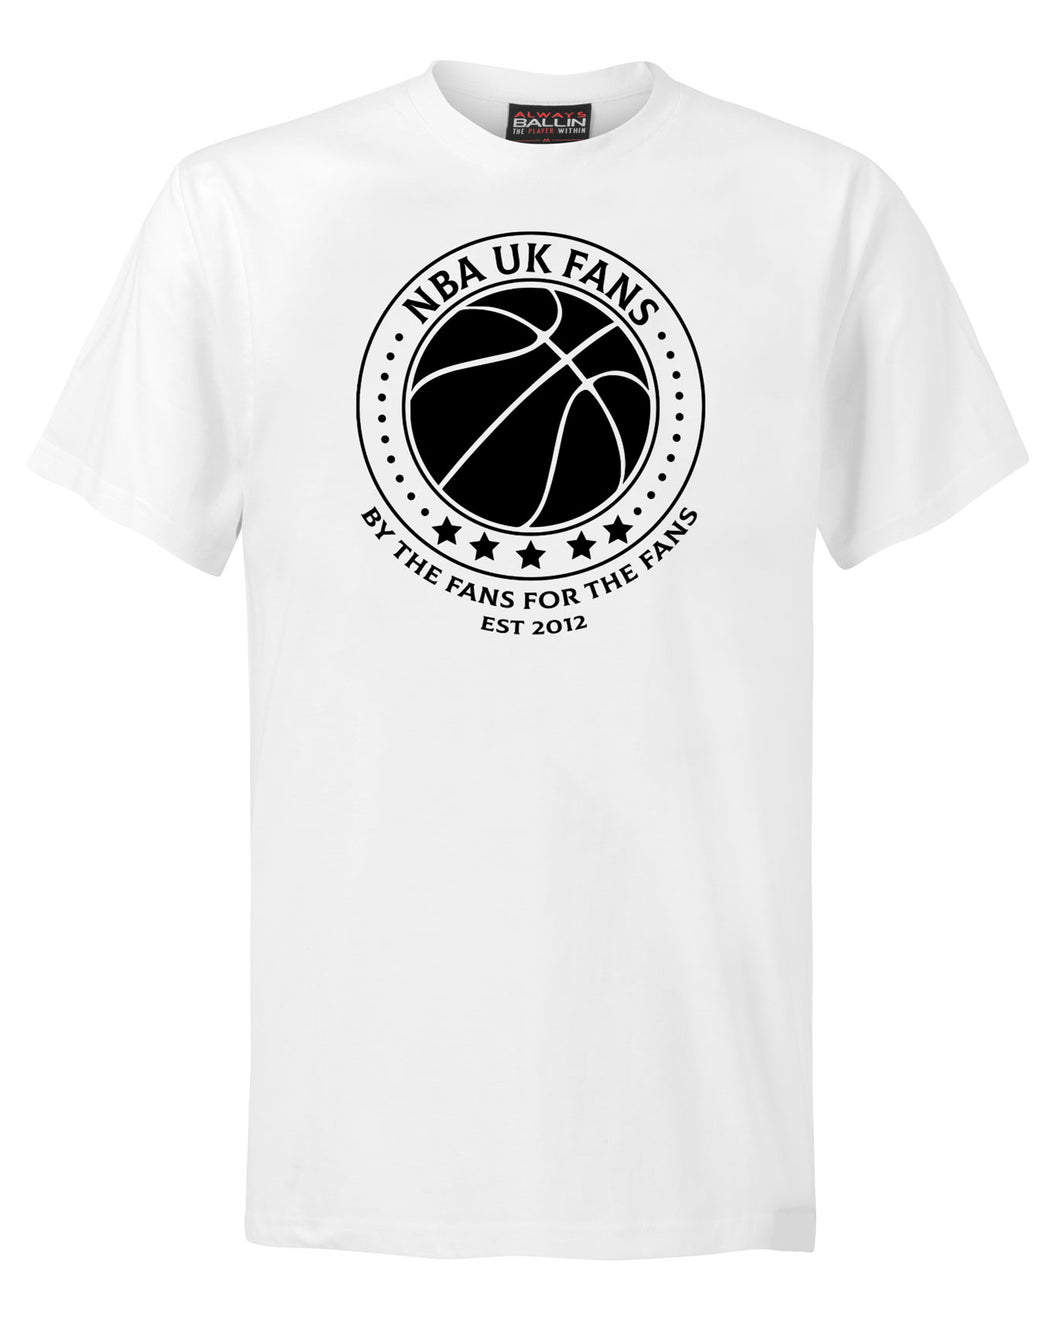 NBA UK Fans Logo White T-Shirt